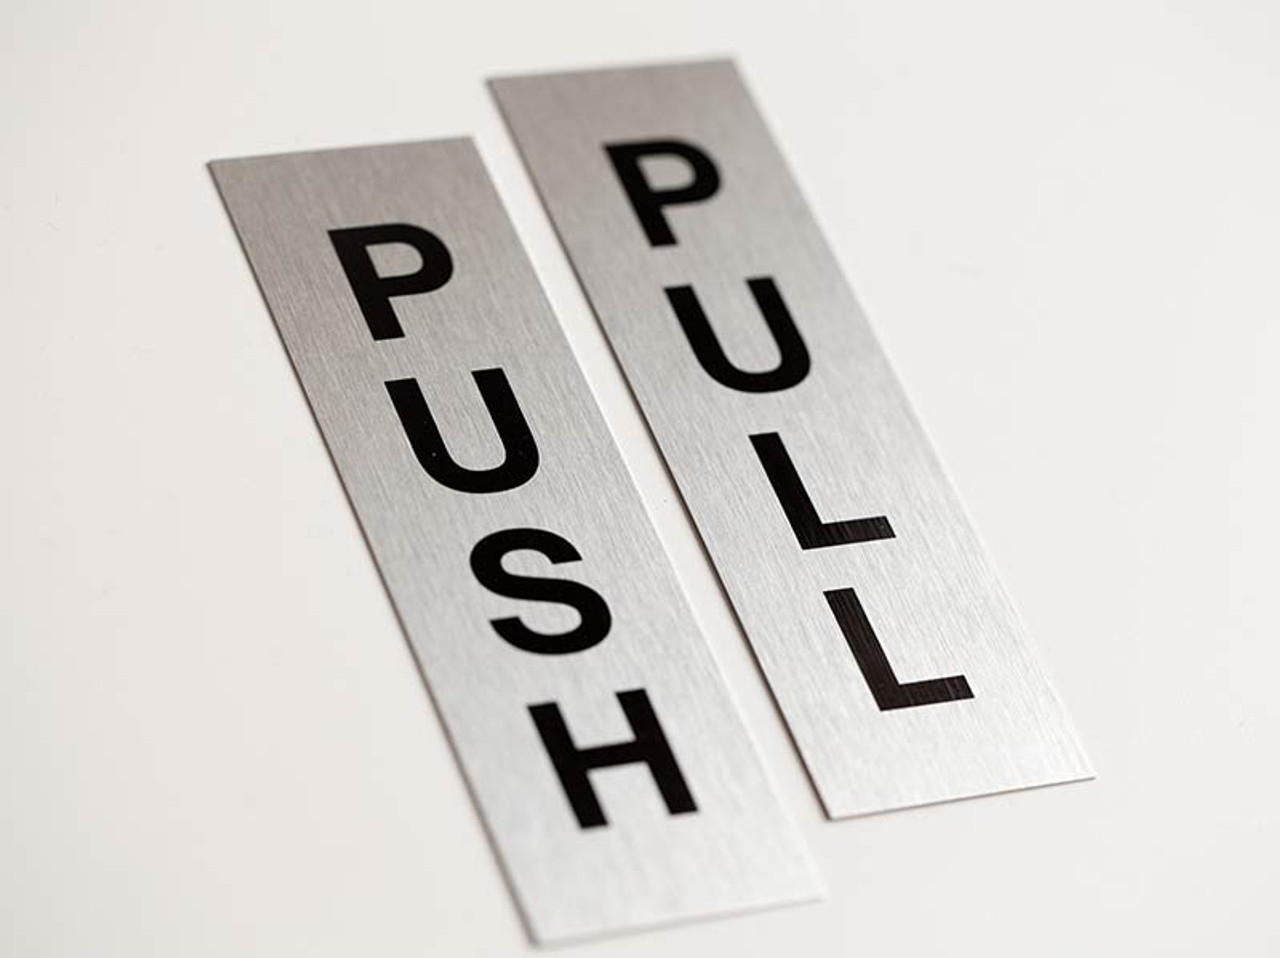 Push-Pull Door Signs